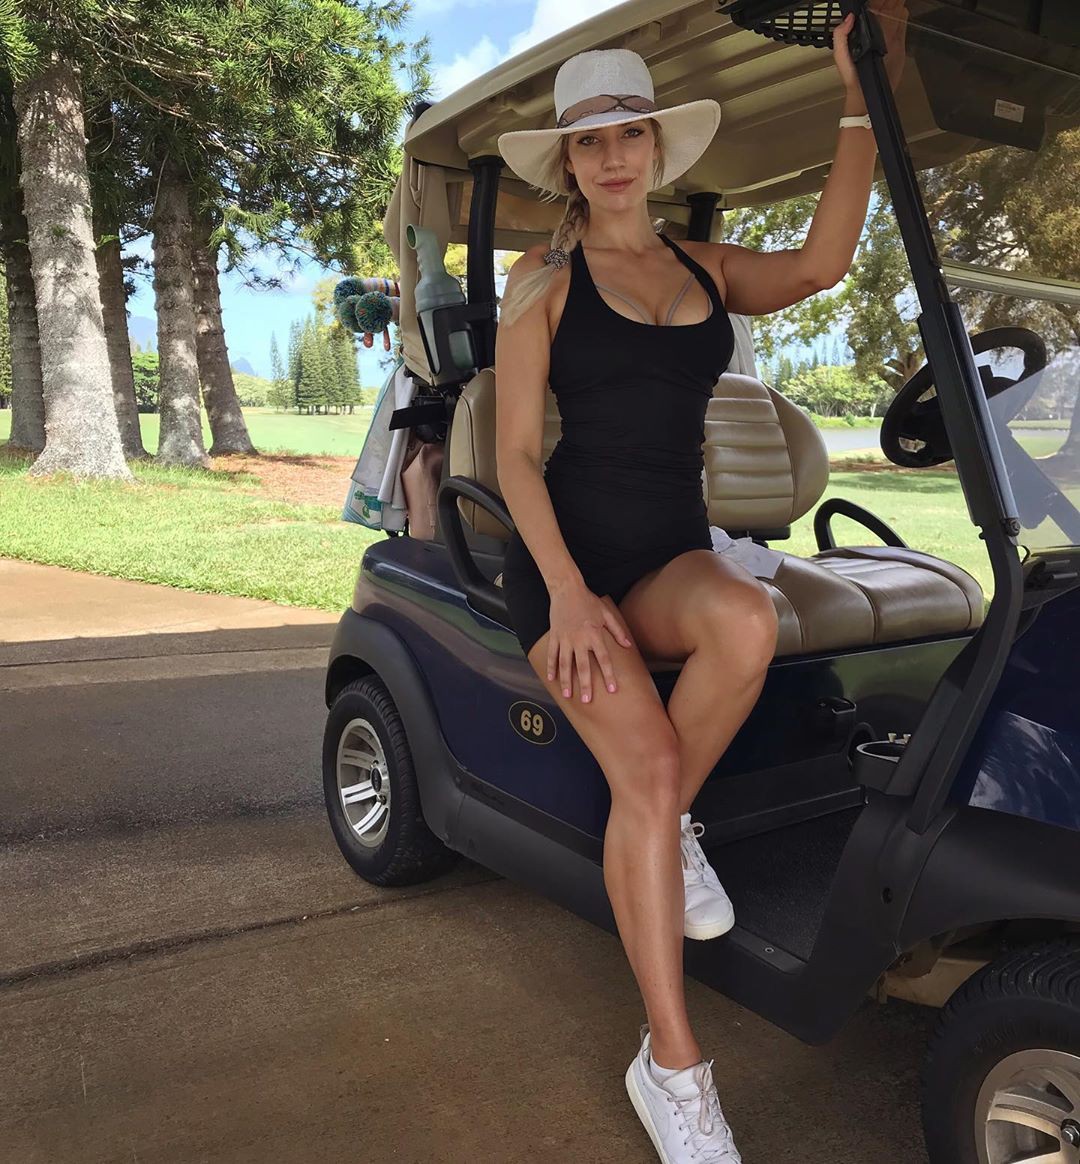 Where to see golf social snapshots, Dubai Desert Classic: Paige Spiranac  